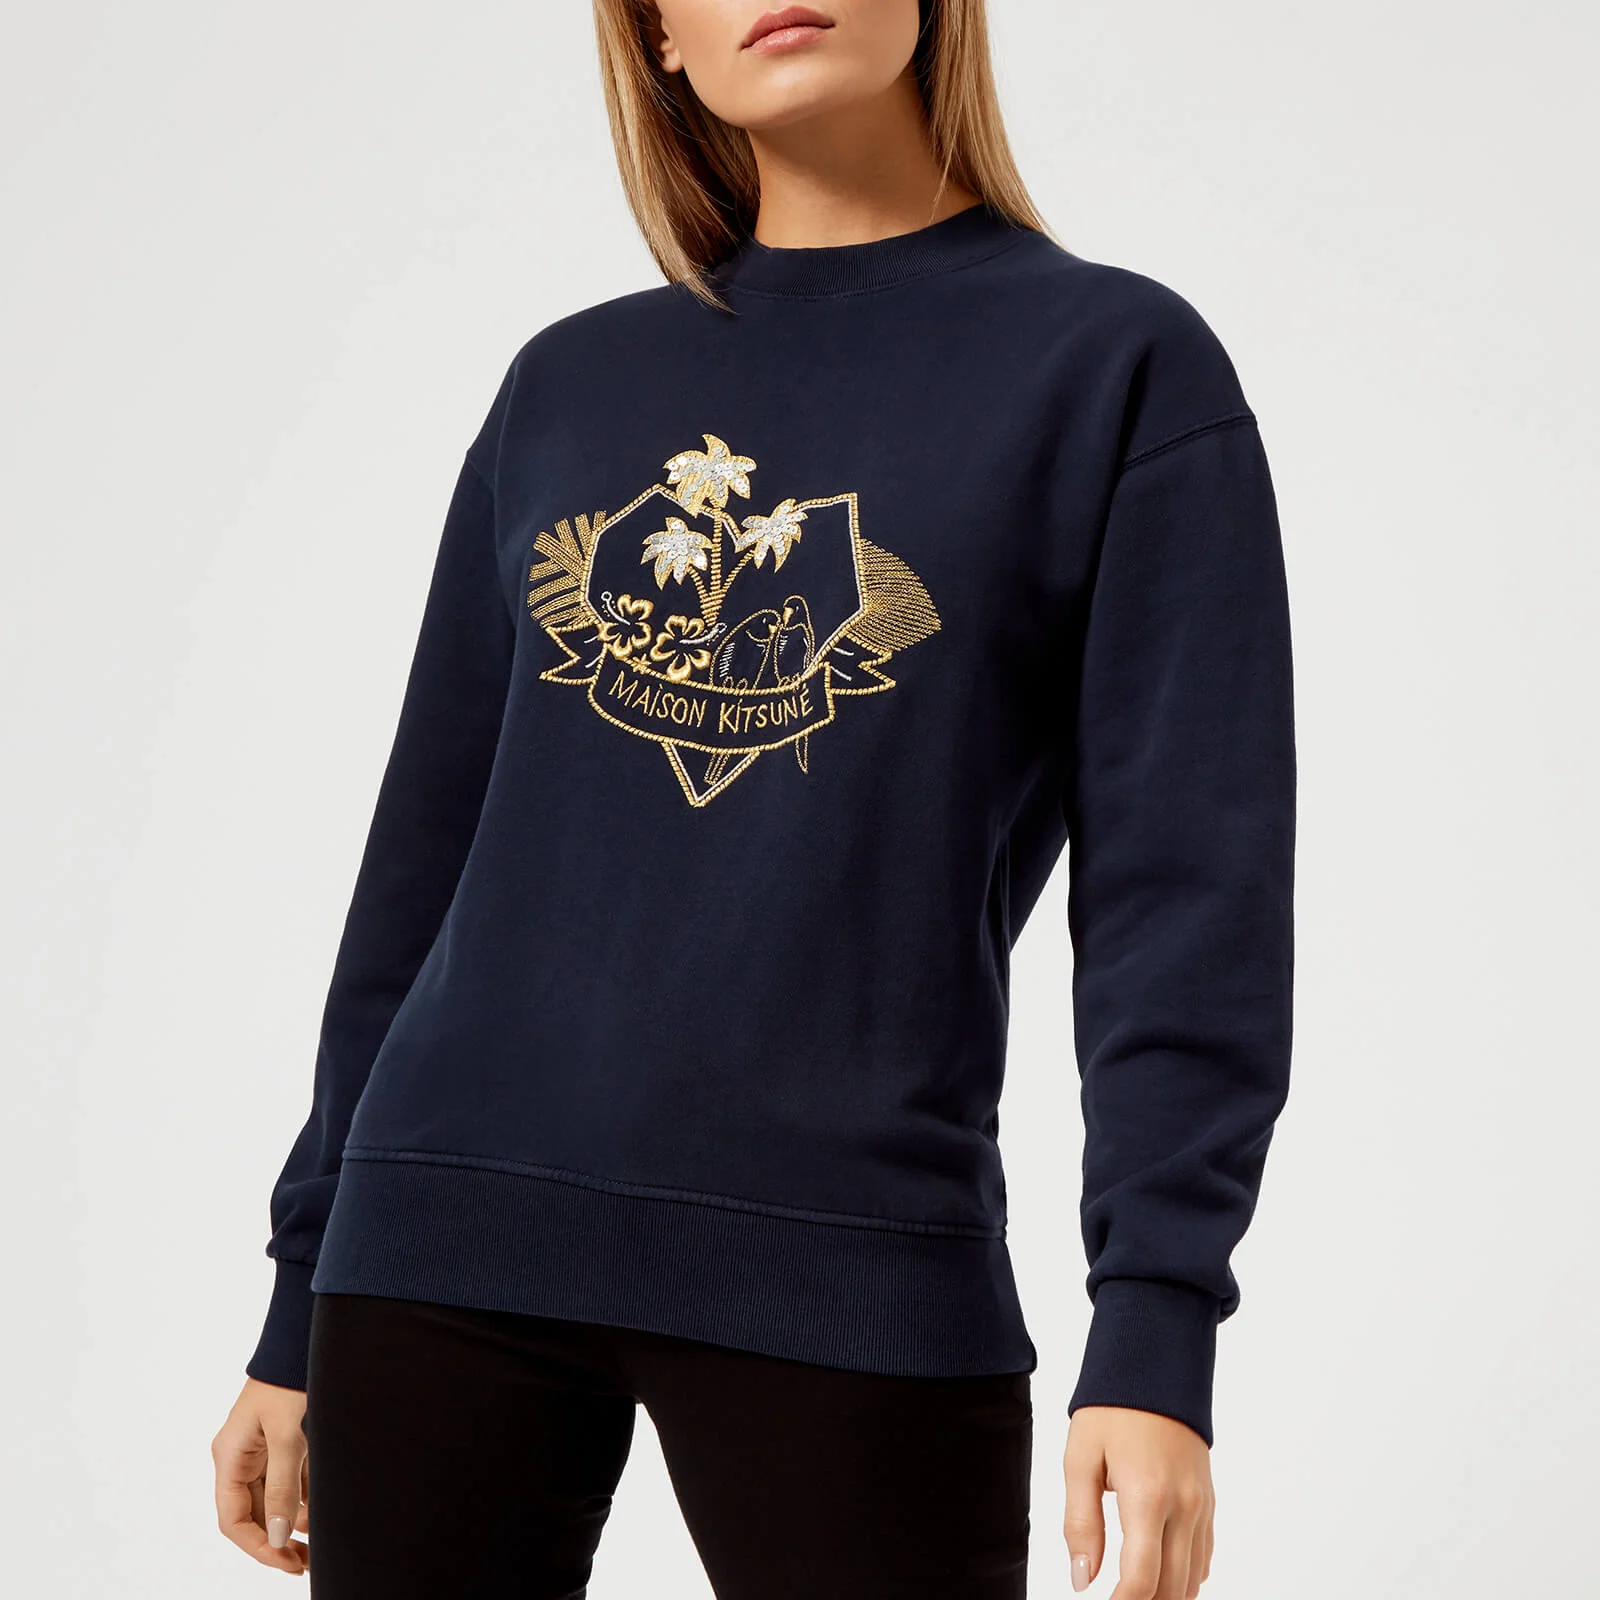 Maison Kitsuné Women's Love Blazon Sweatshirt - Navy Image 1